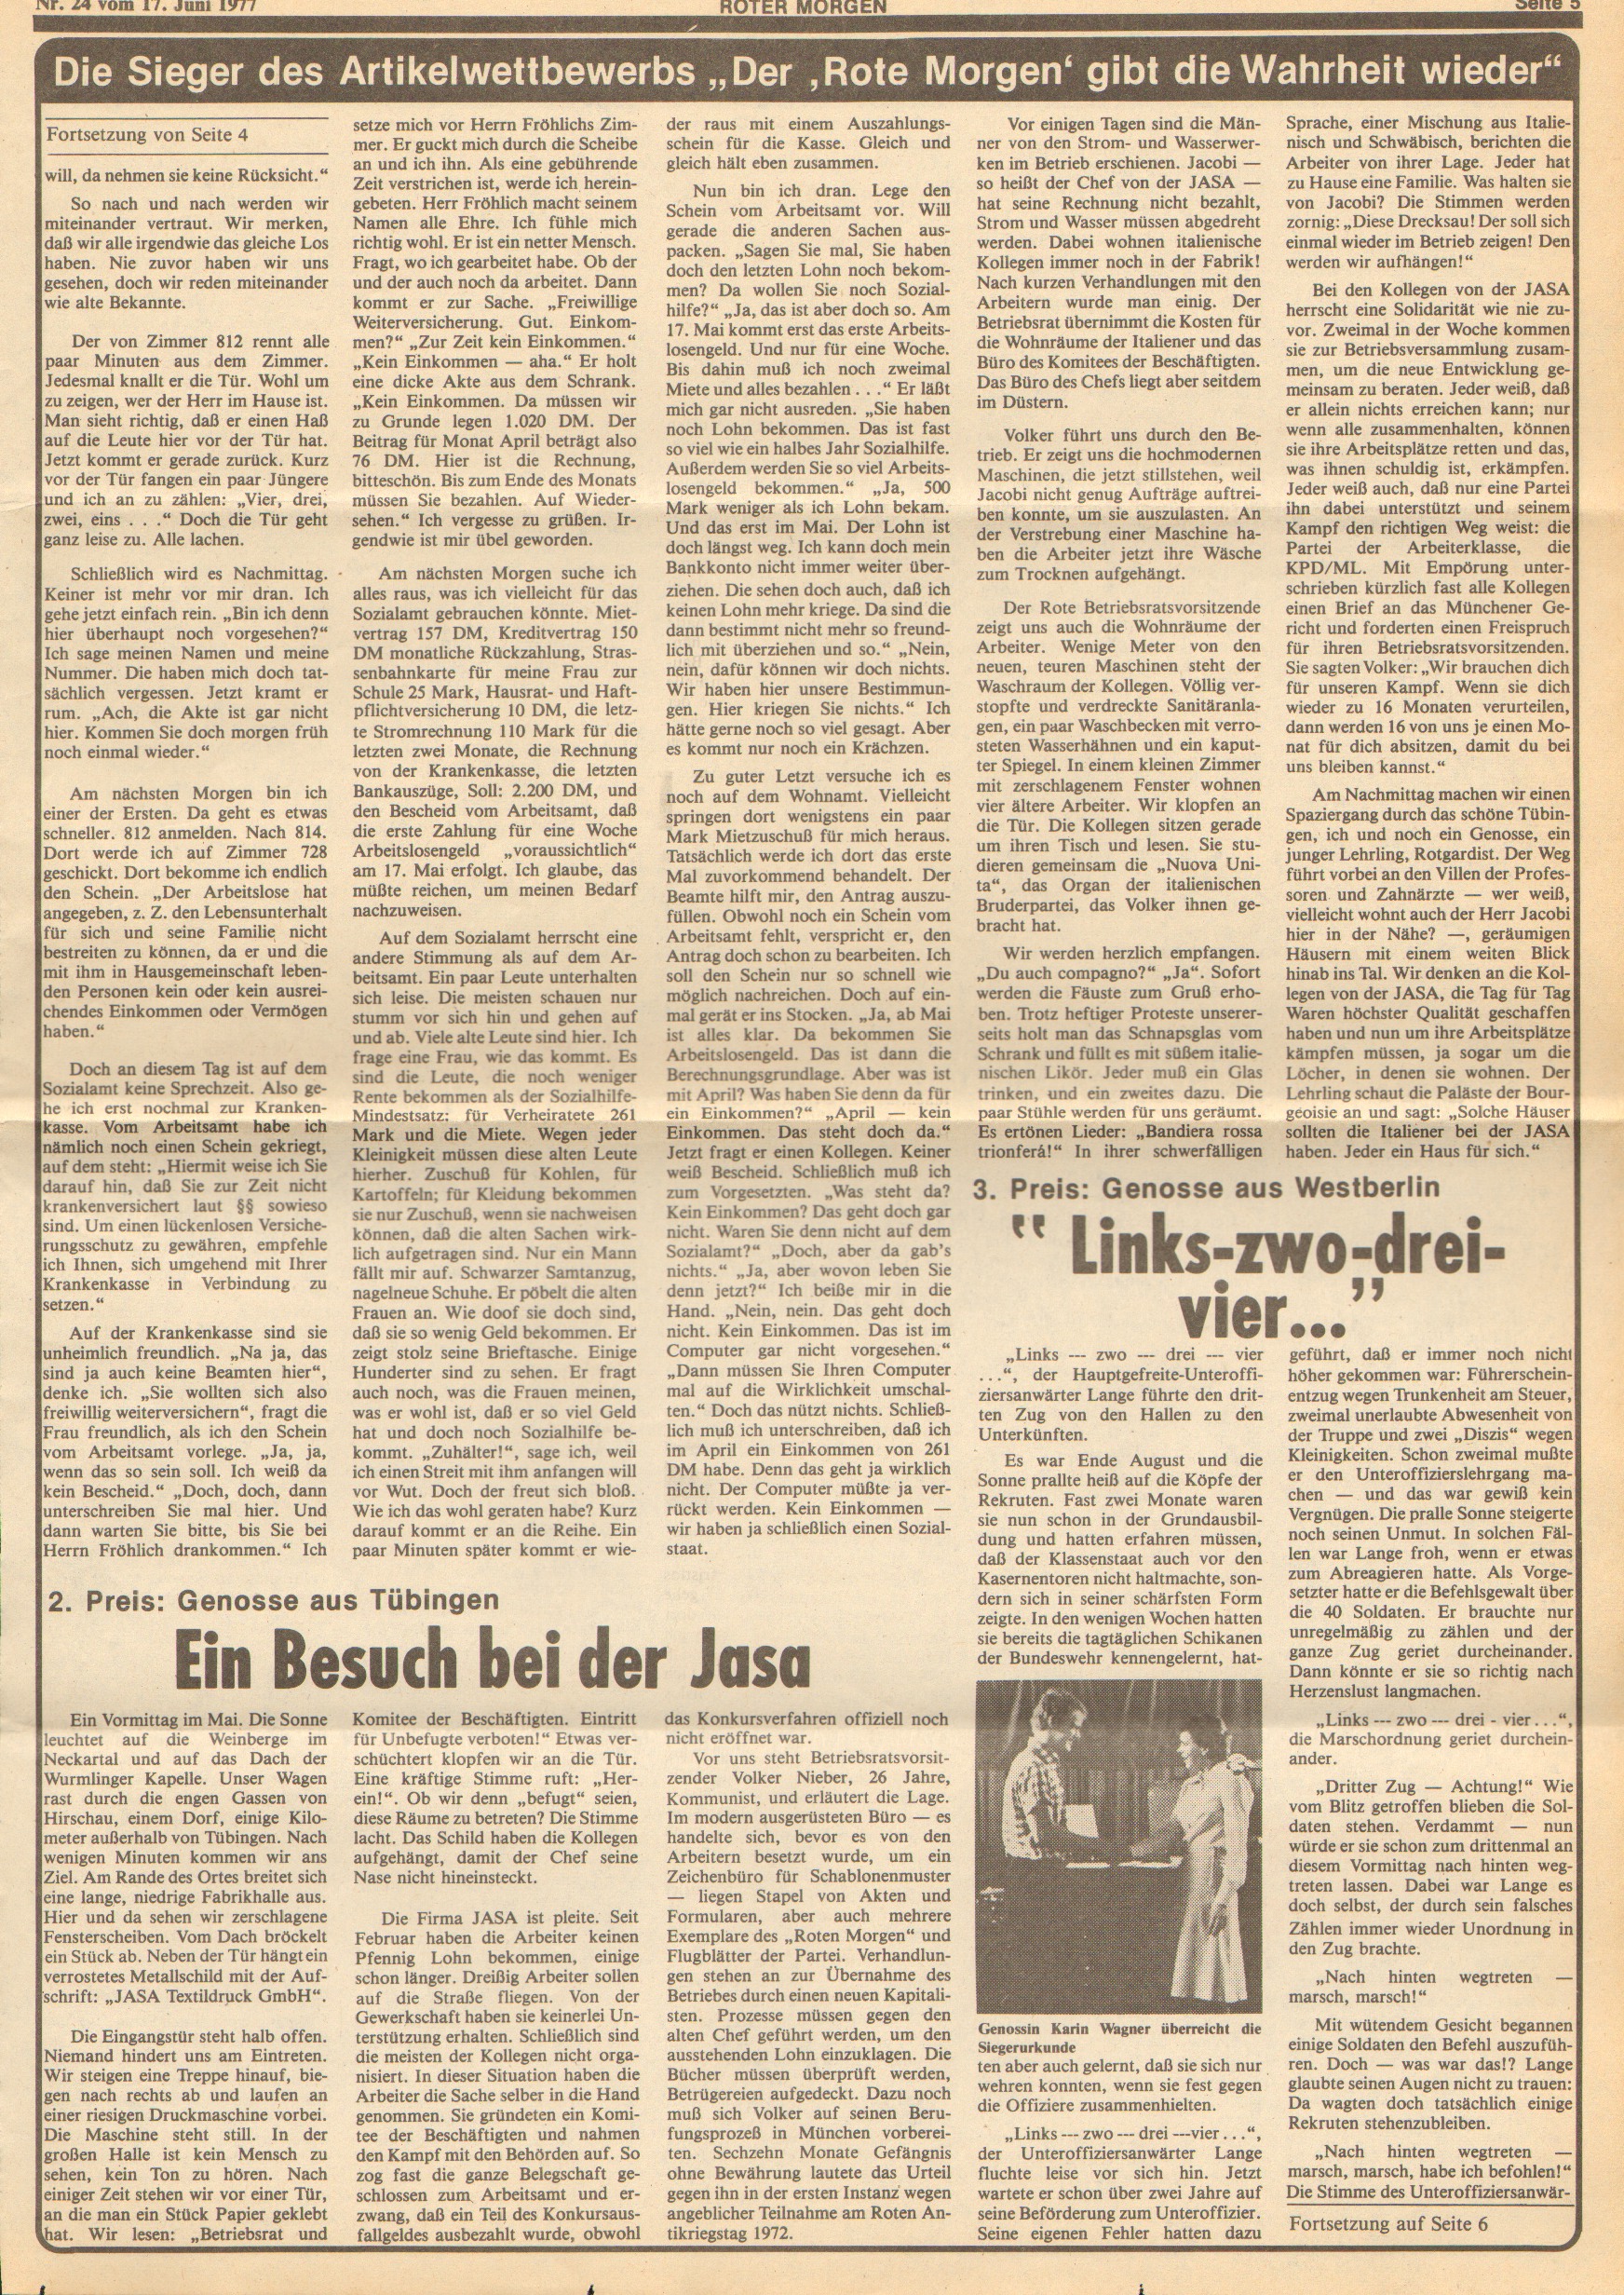 Roter Morgen, 11. Jg., 17. Juni 1977, Nr. 24, Seite 5